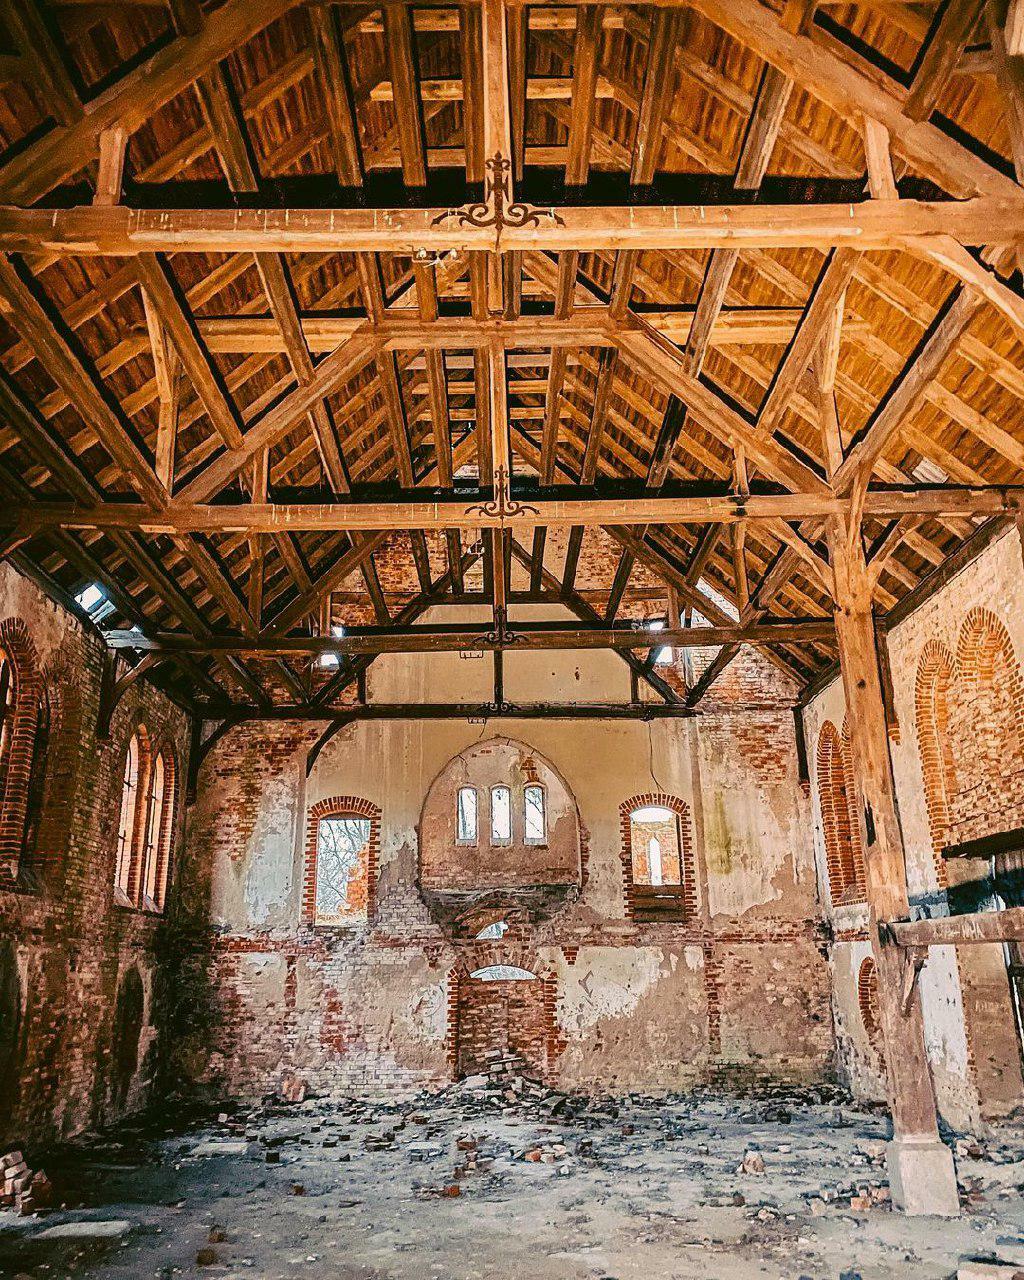 Кирха Гросс Карповена, деревянный потолок и интерьер кирхи